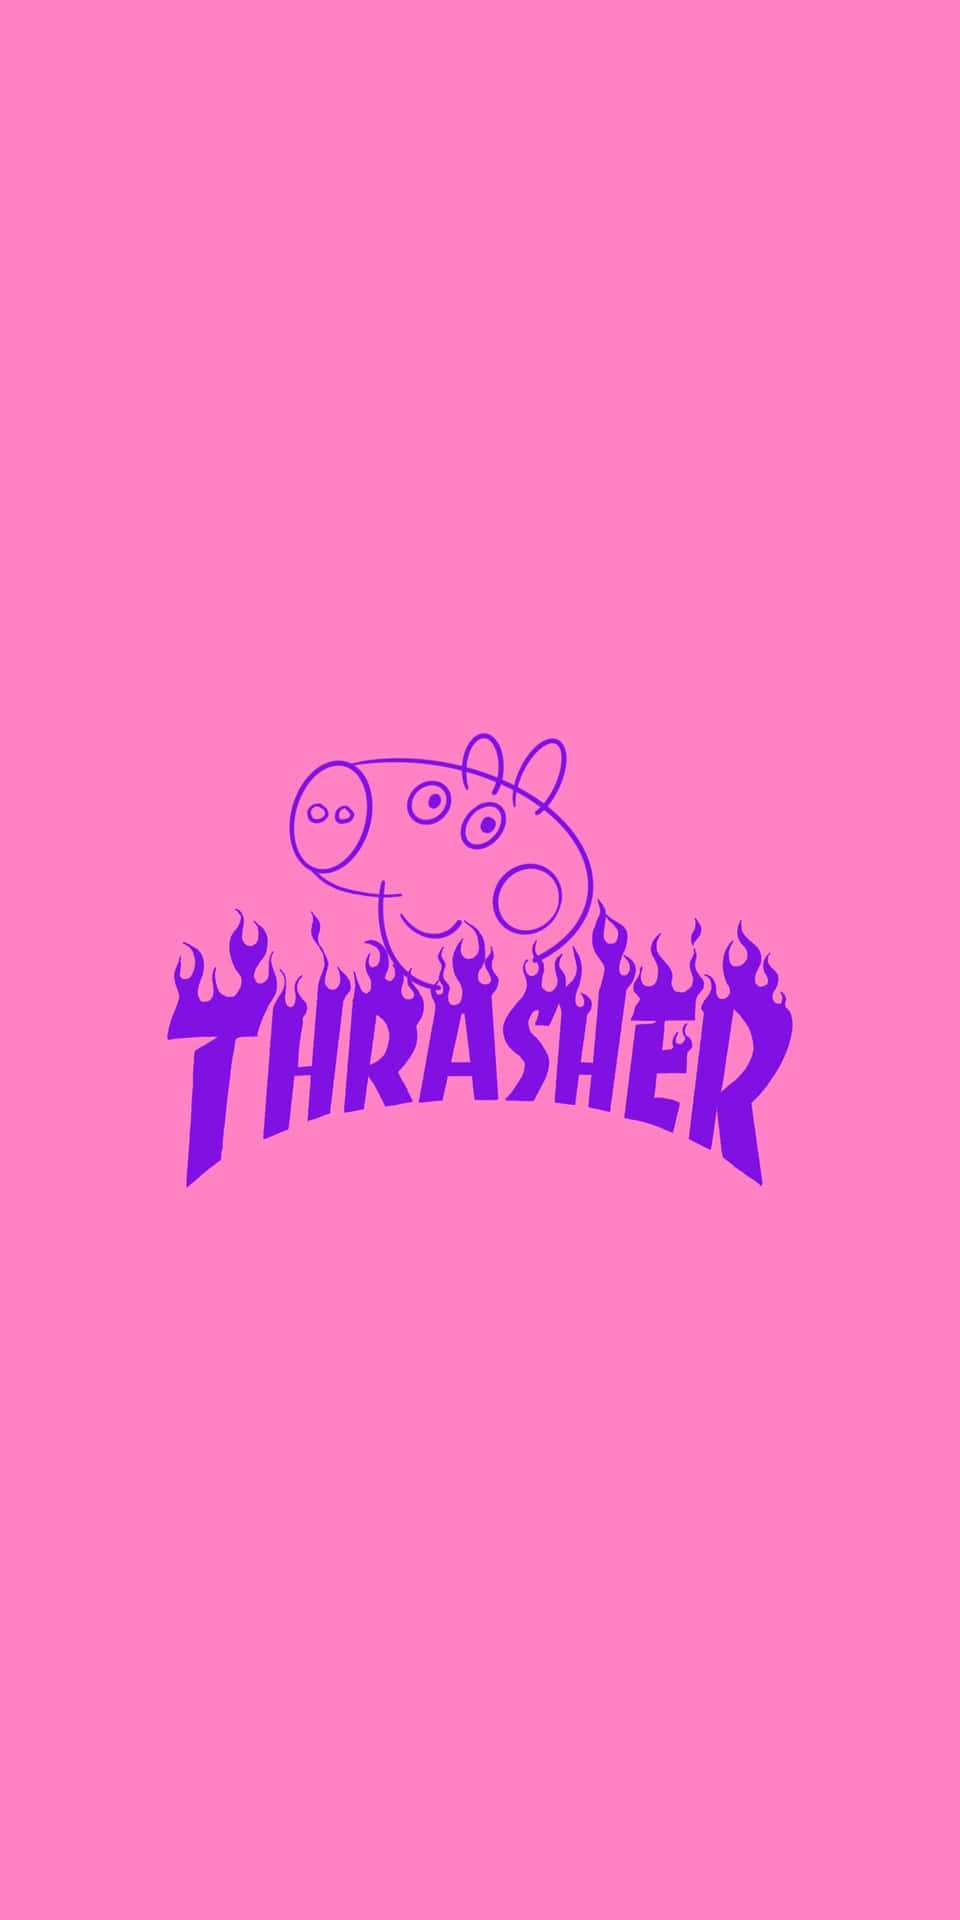 Rep the Thrasher lifestyle